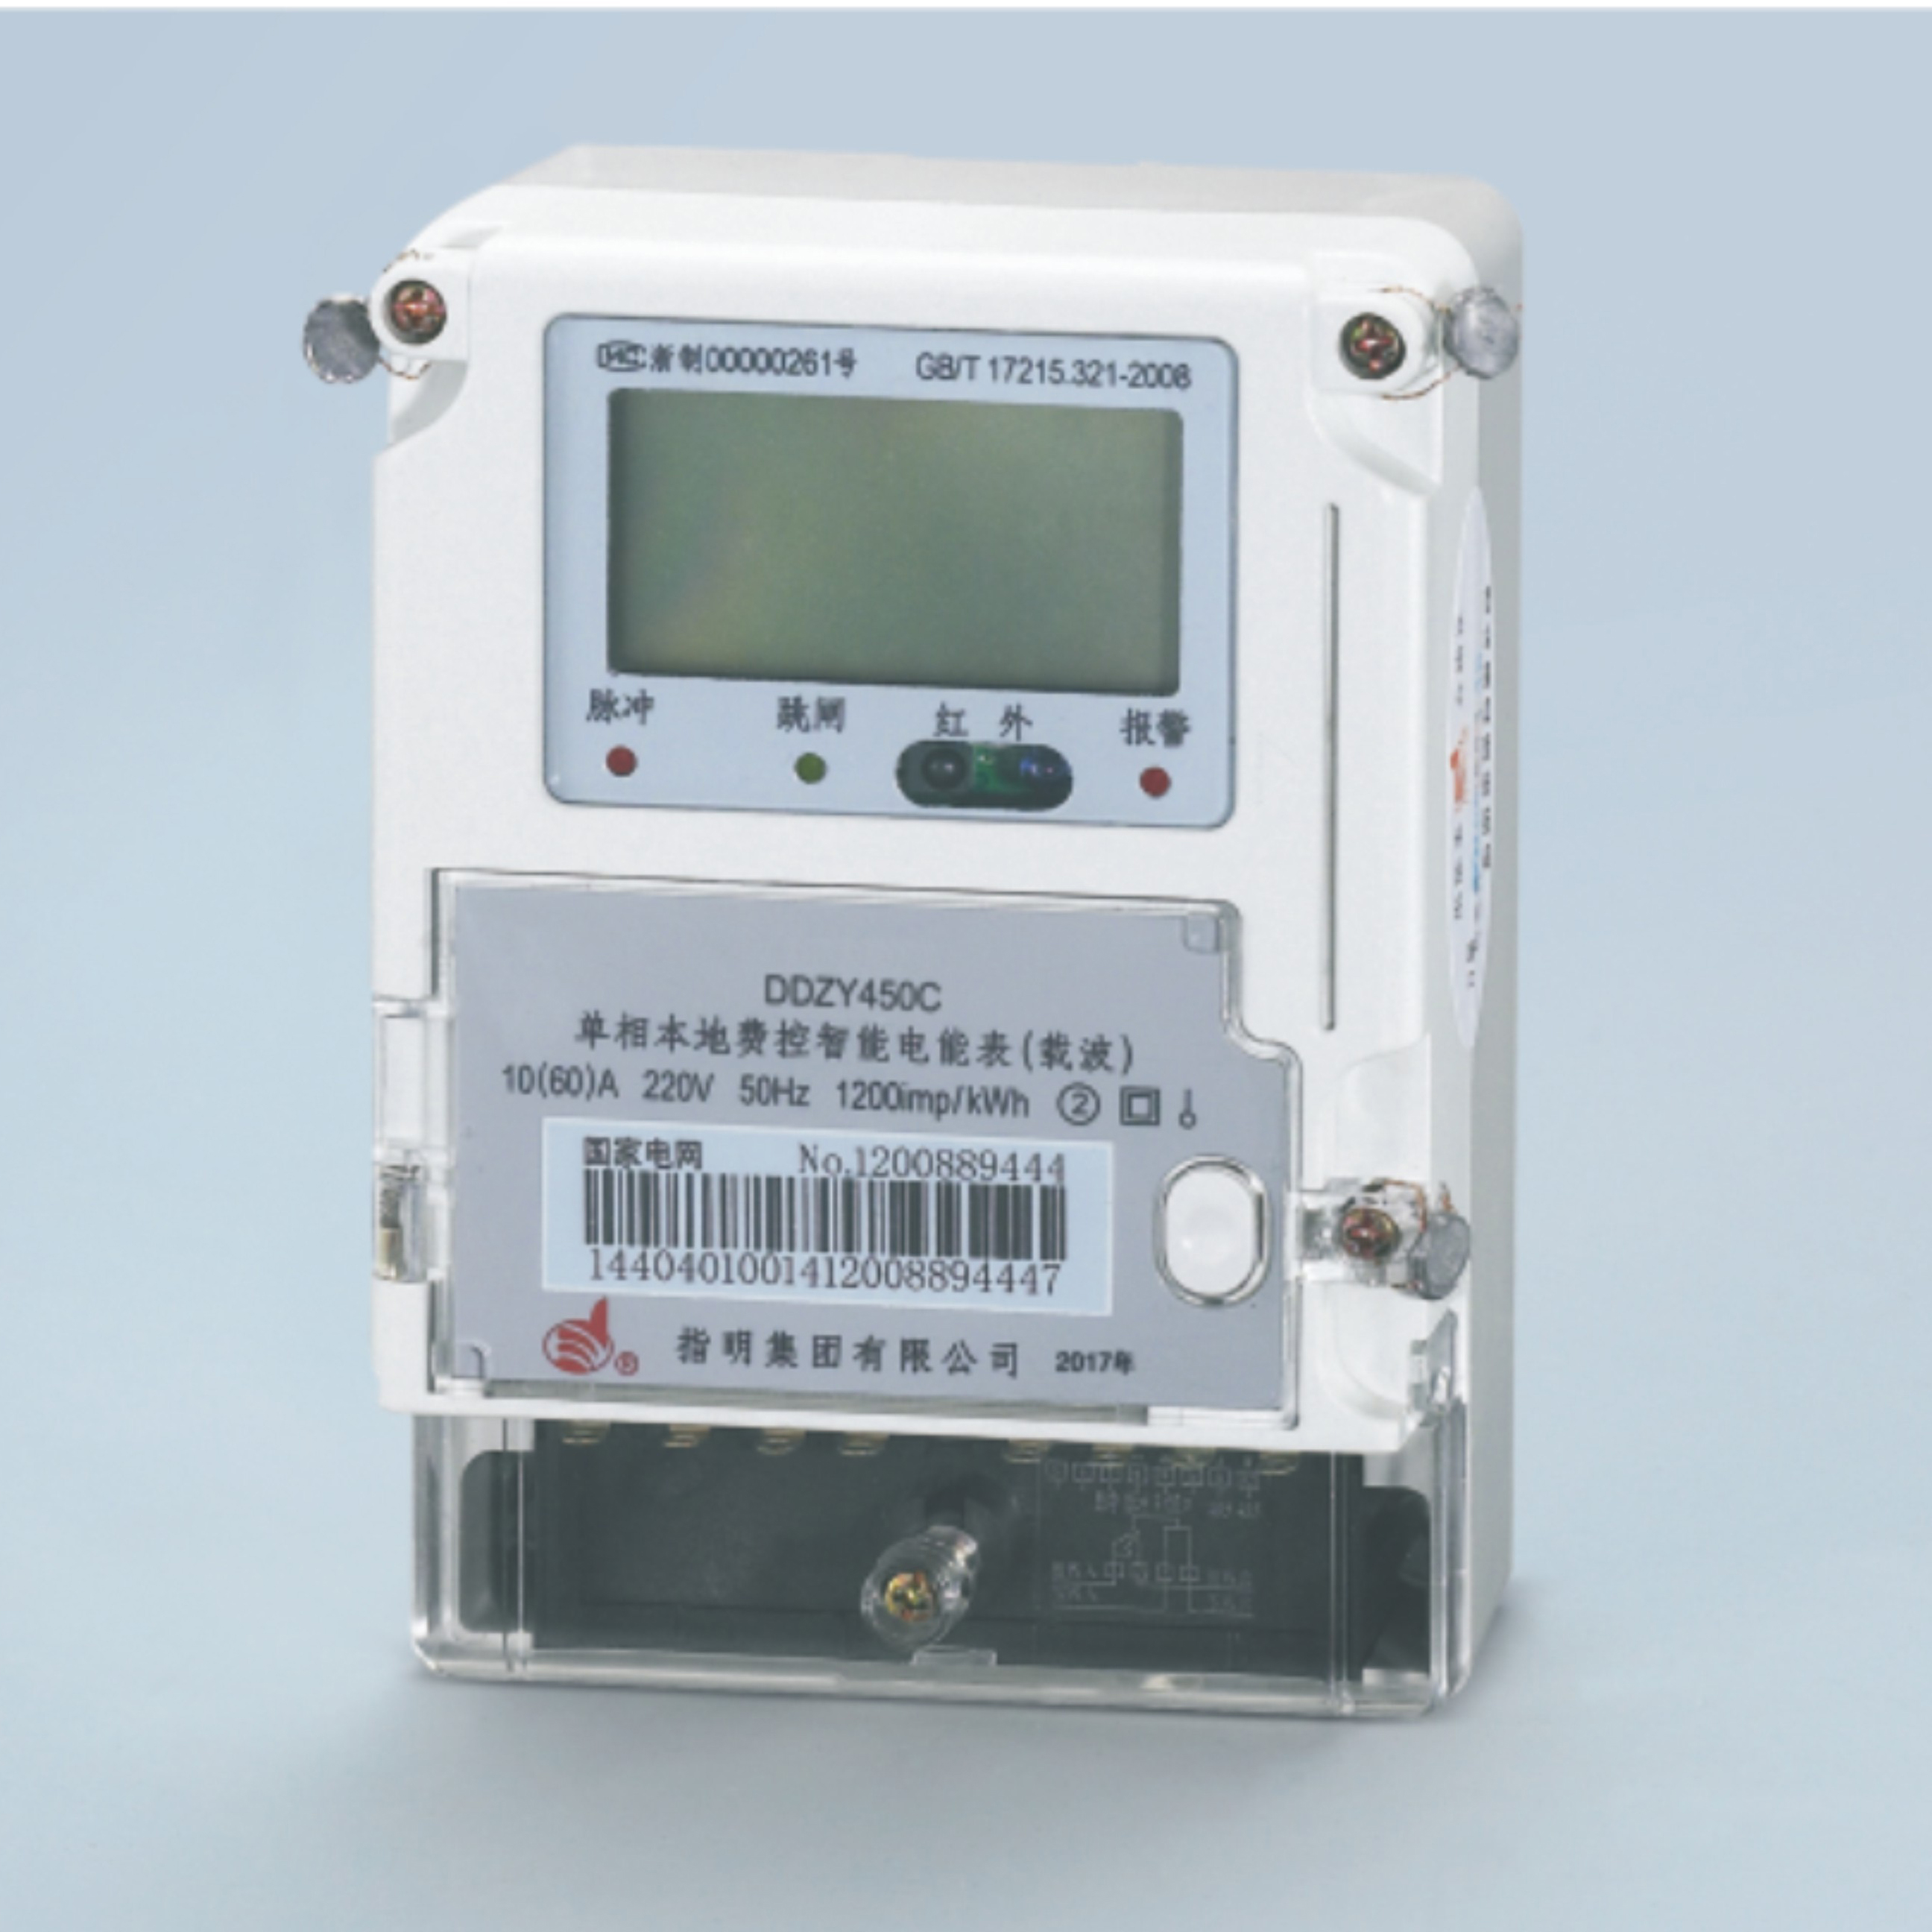 DDZY450C  Single phase tariff controlled intelligent energy meter 